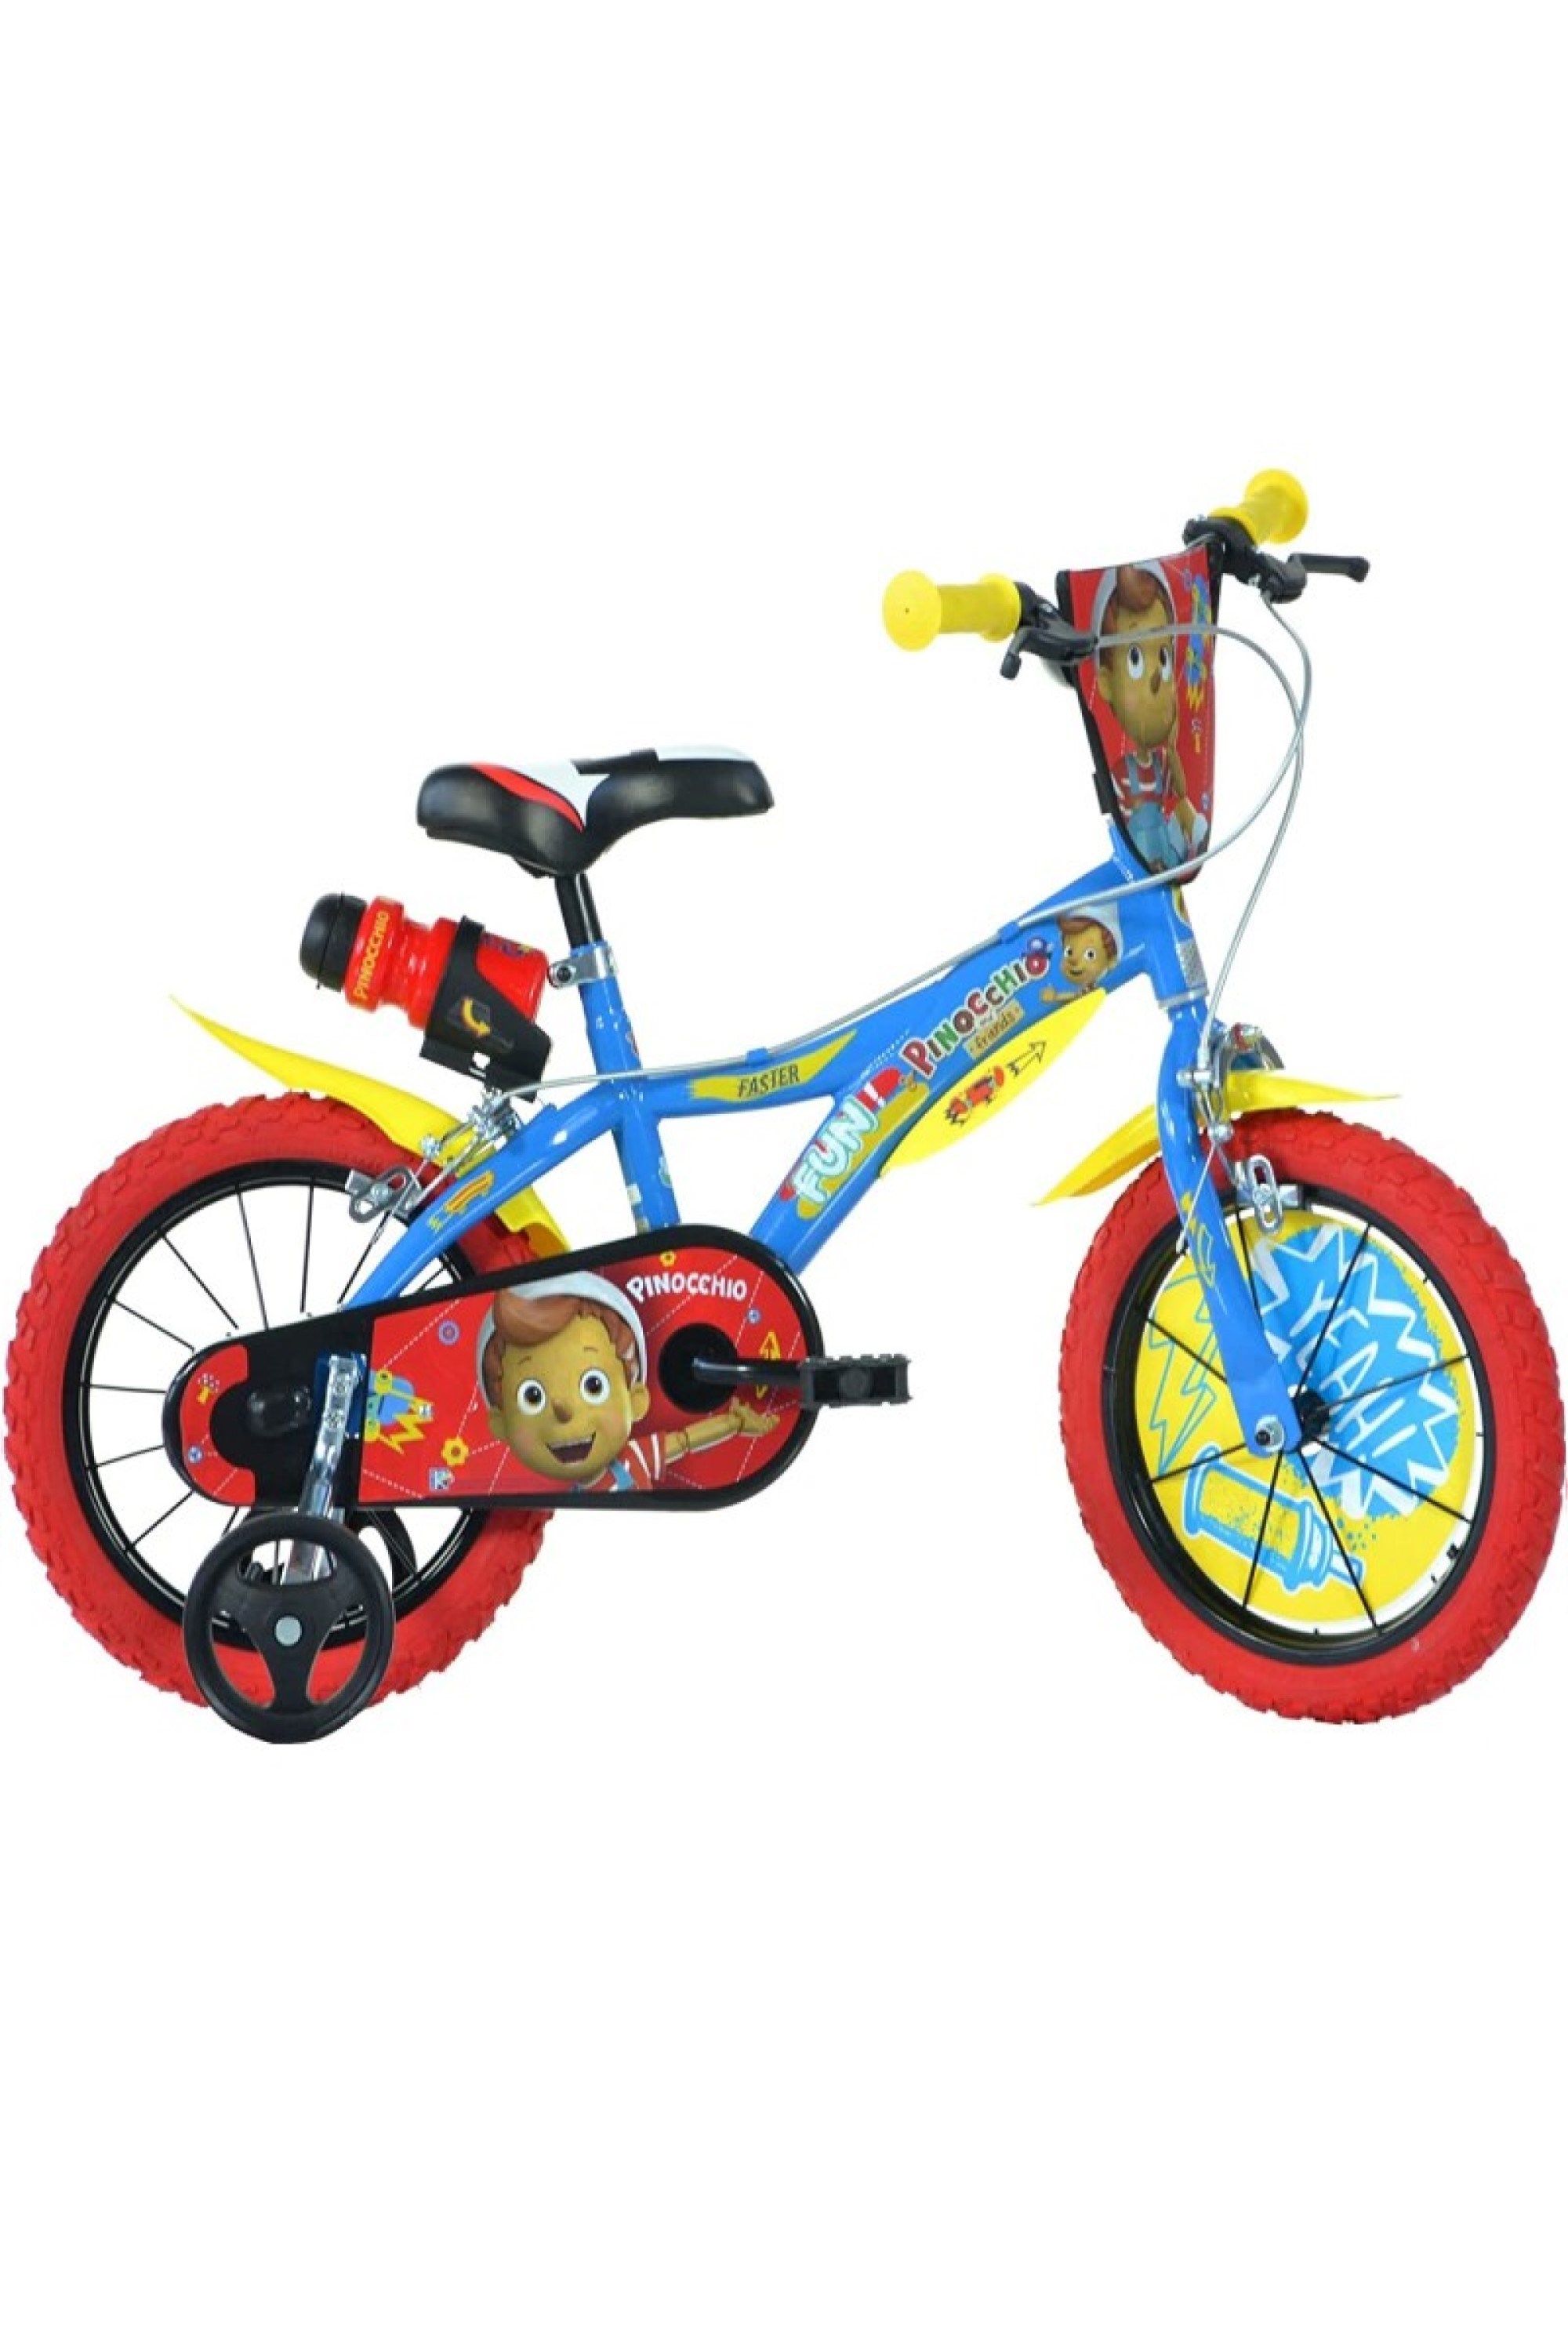 Pinocchio 16" Kids Bike -